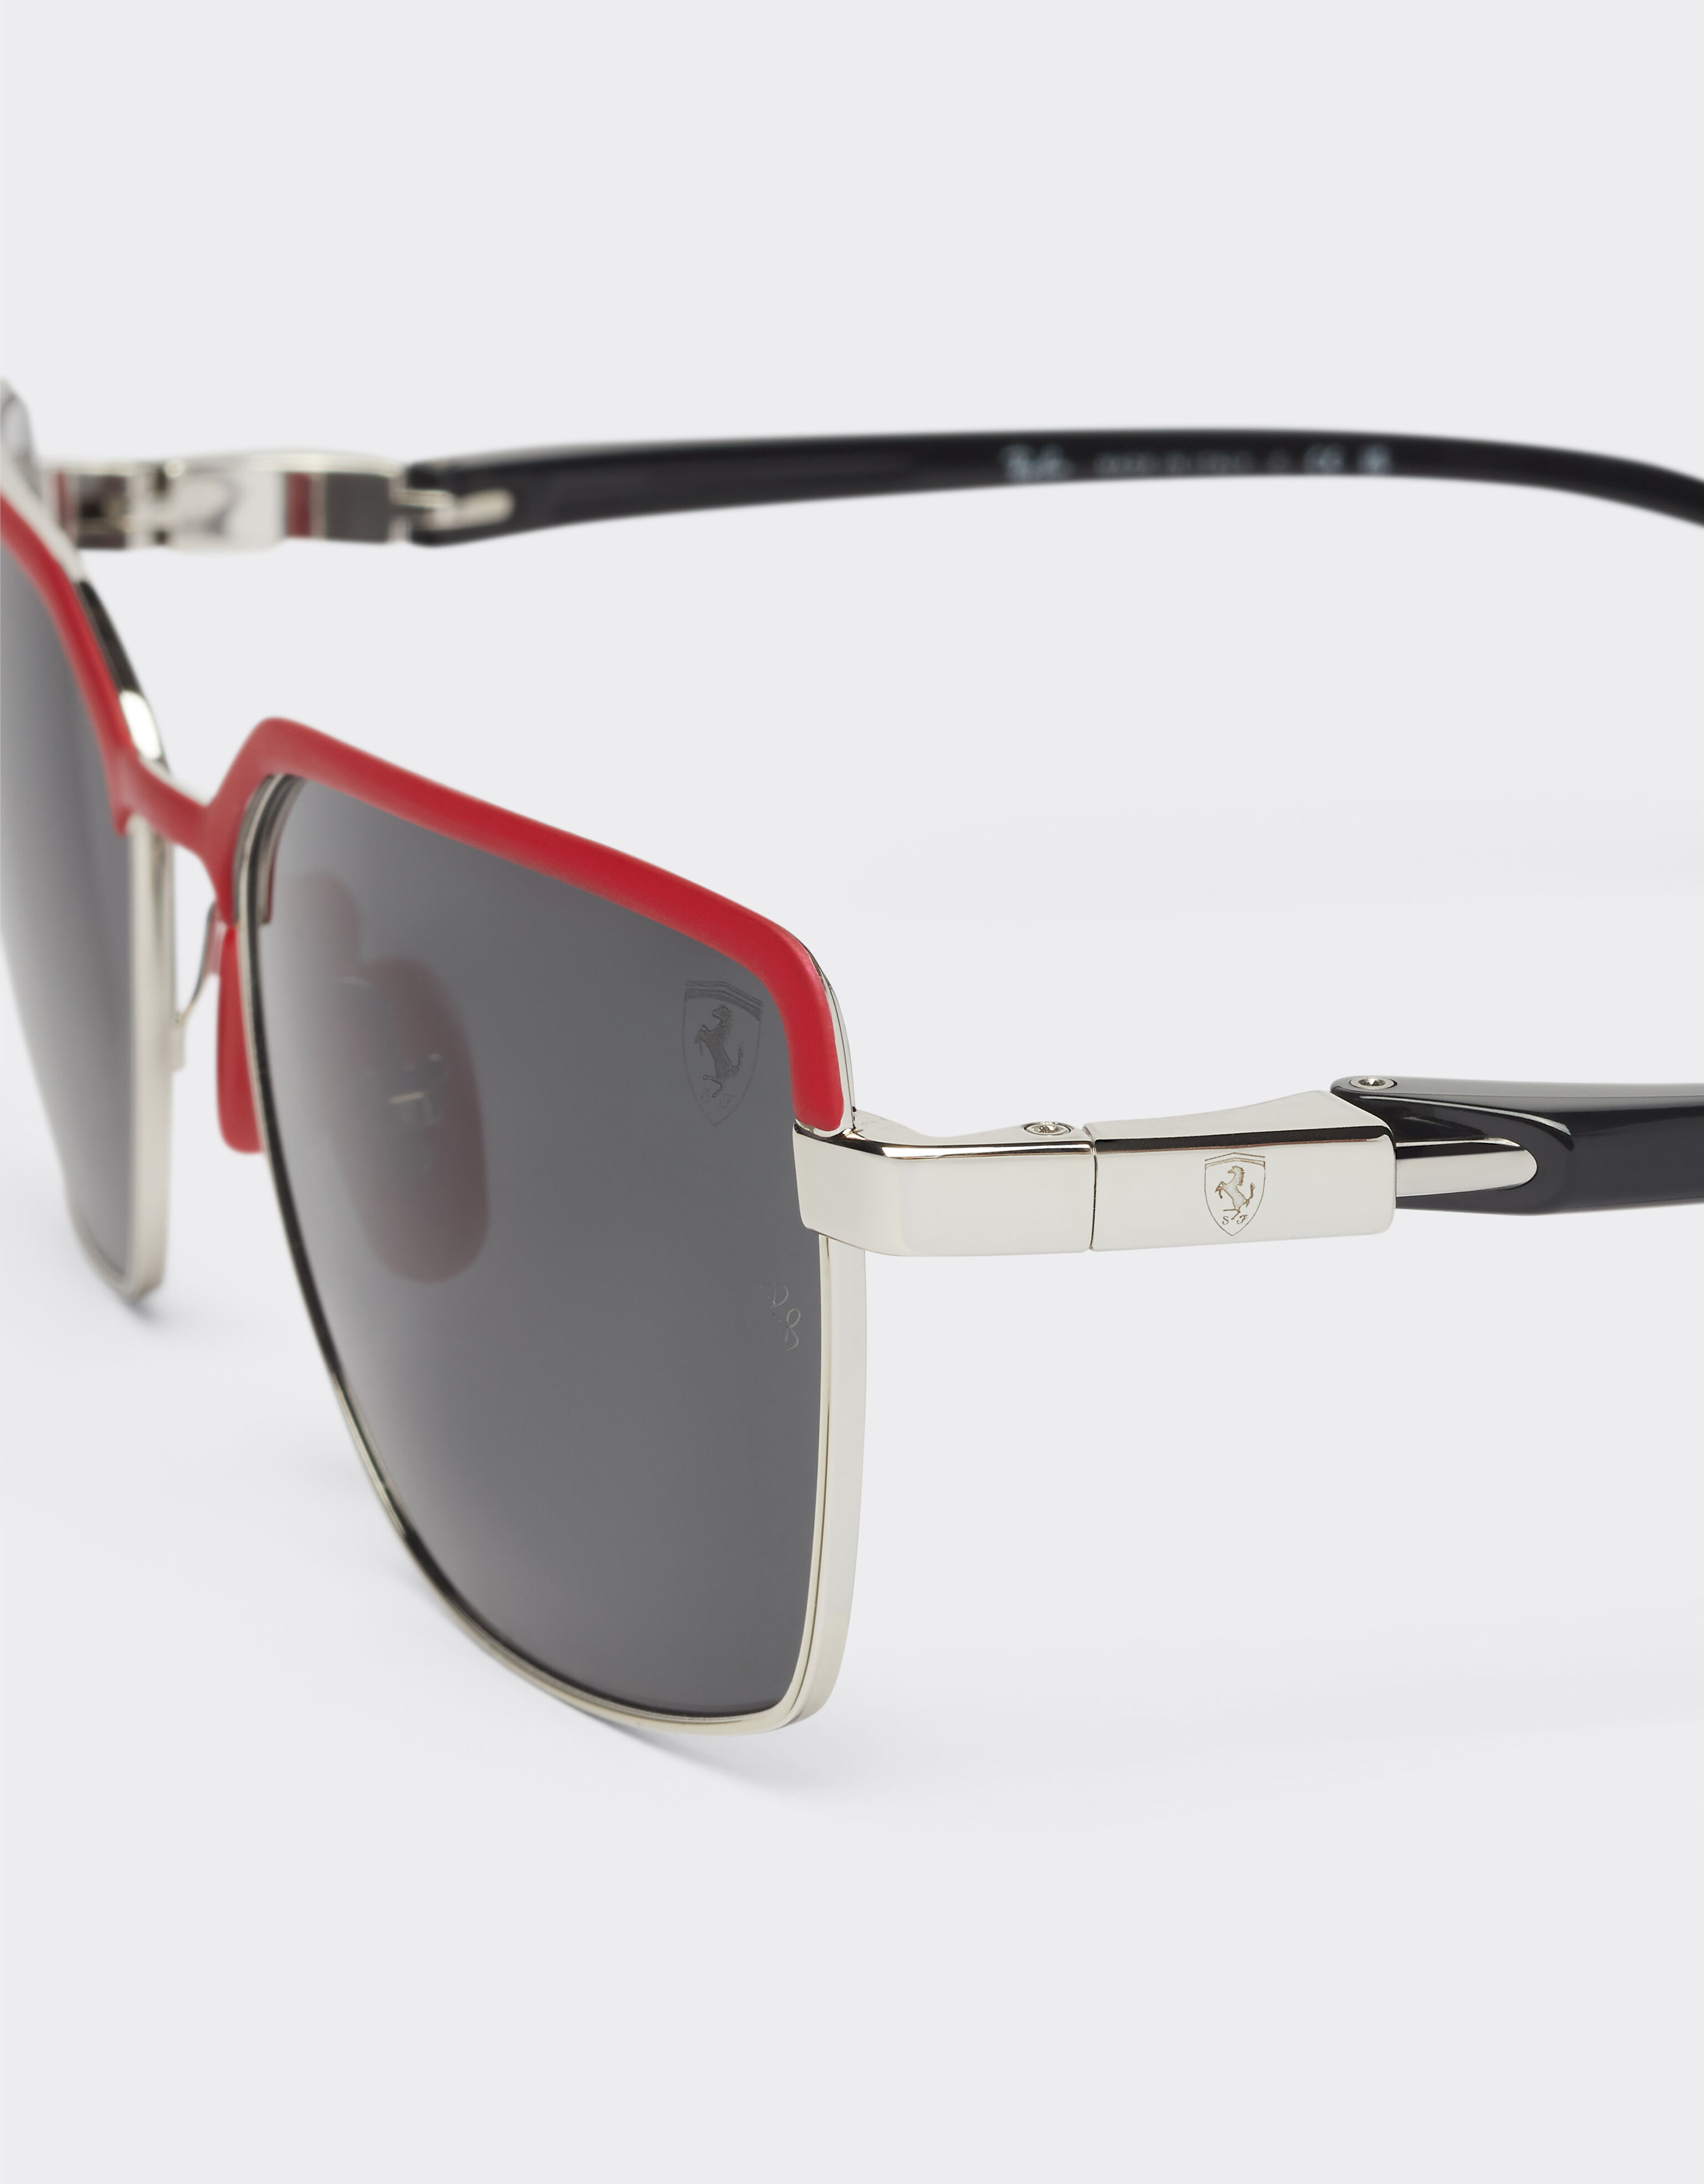 Ferrari Ray-Ban for Scuderia Ferrari 0RB3743M matt red and gunmetal grey metal sunglasses with grey lenses Dark Grey F1302f